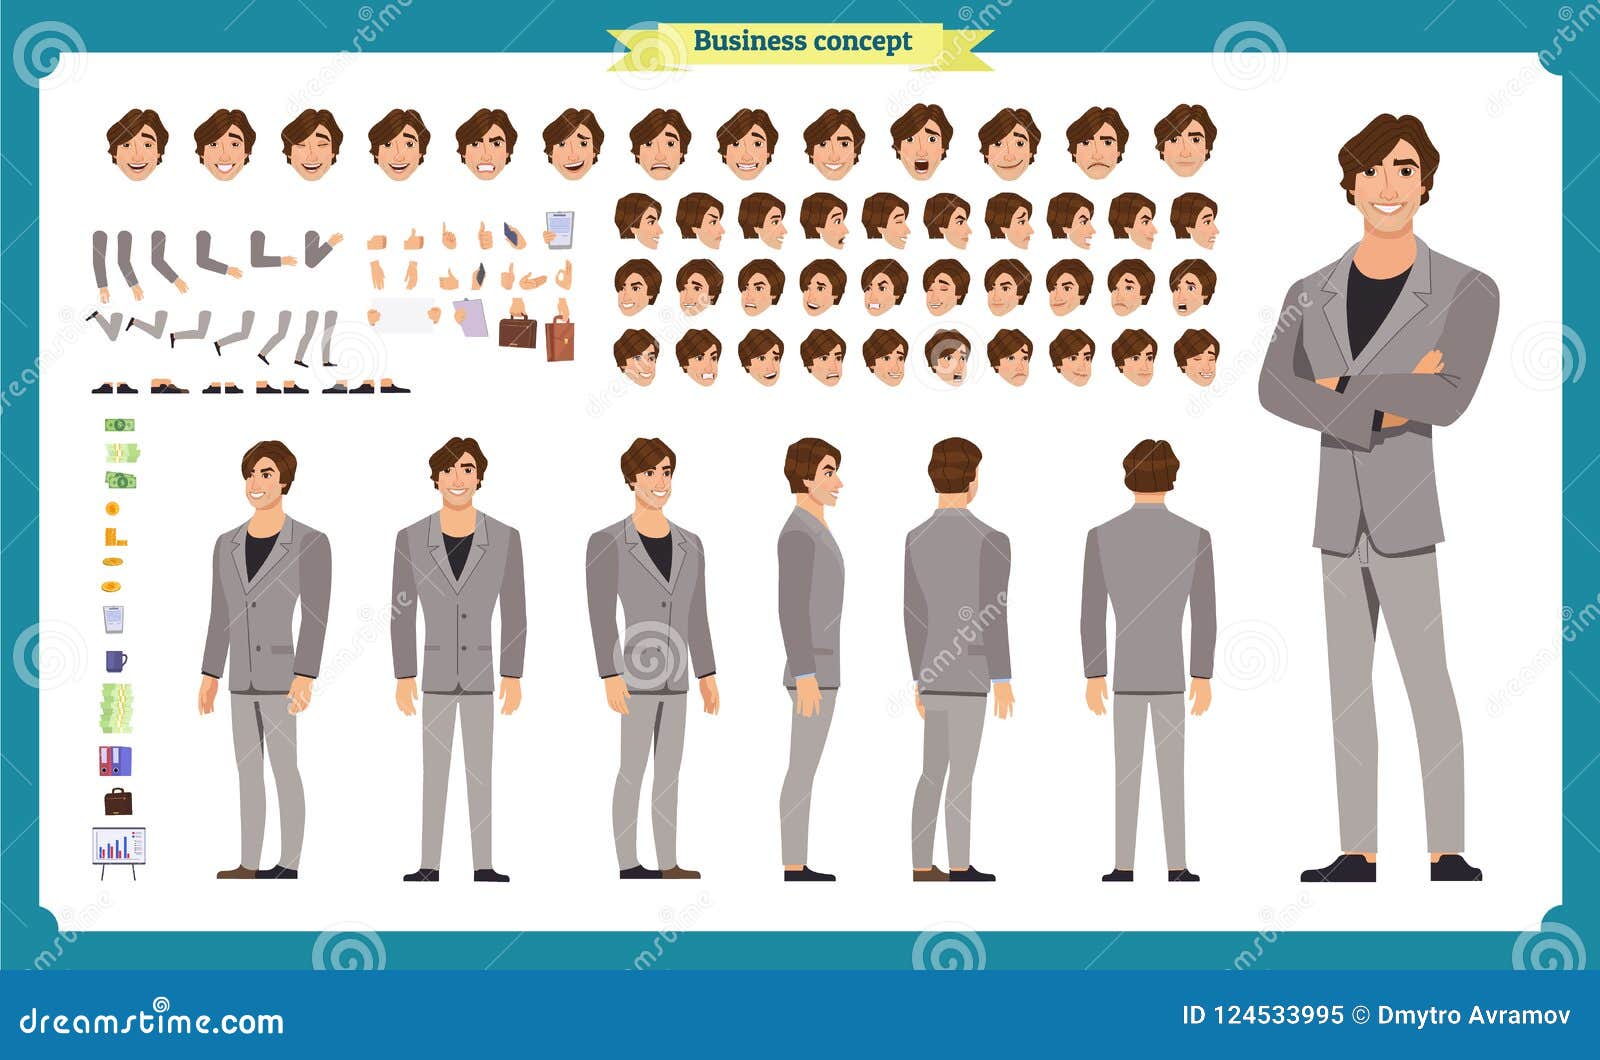 people character business set. front, side, back view animated character.businessman character creation set